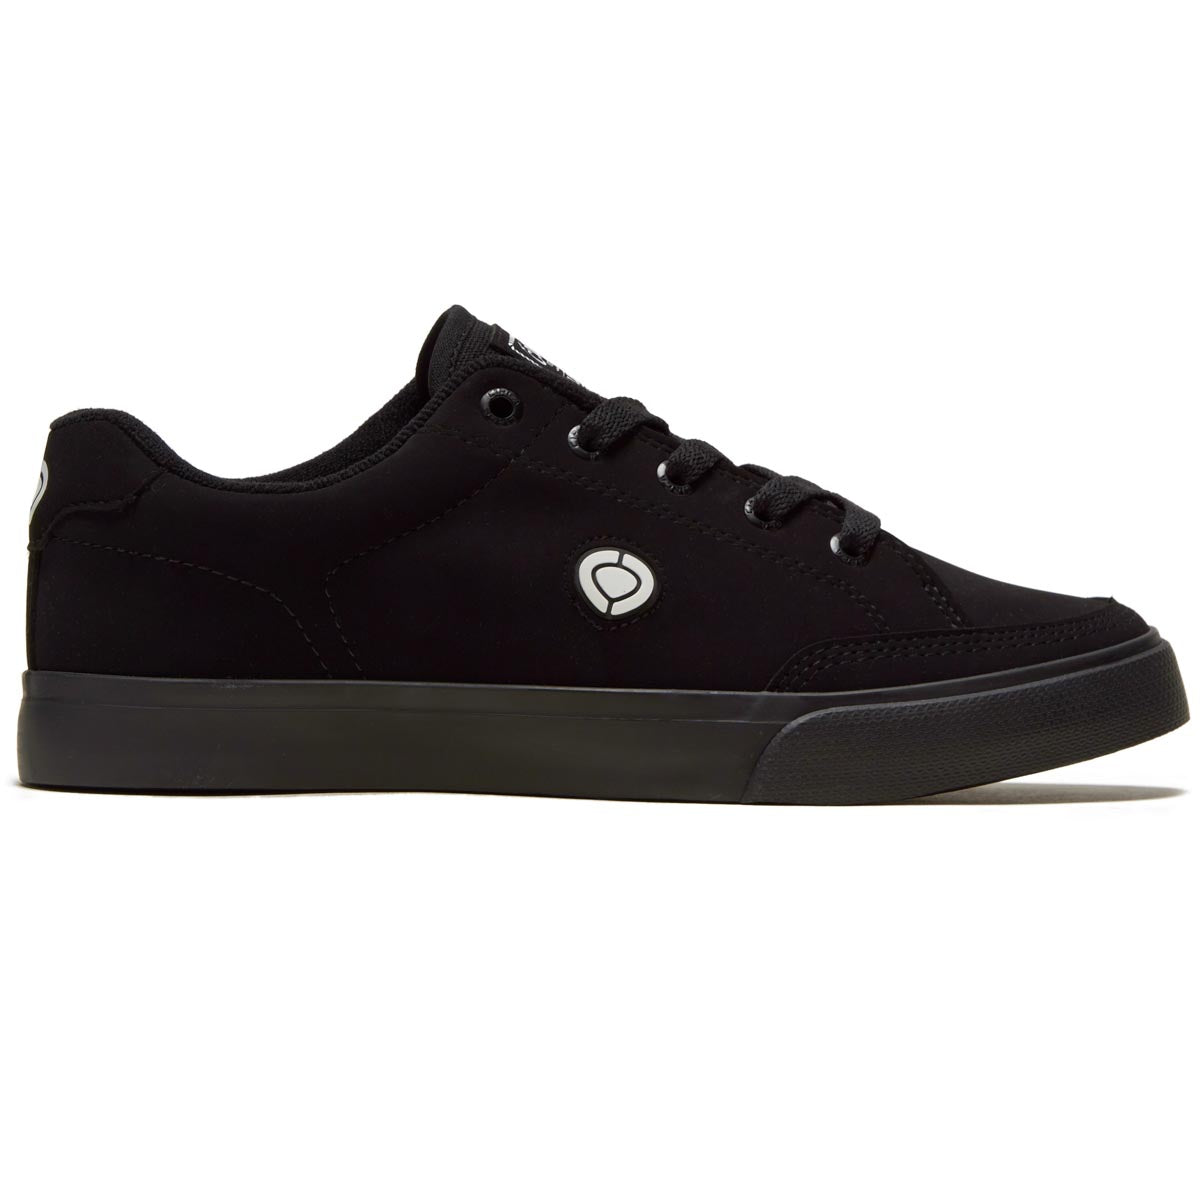 C1rca AL 50 Slim Shoes - Black/Black image 1